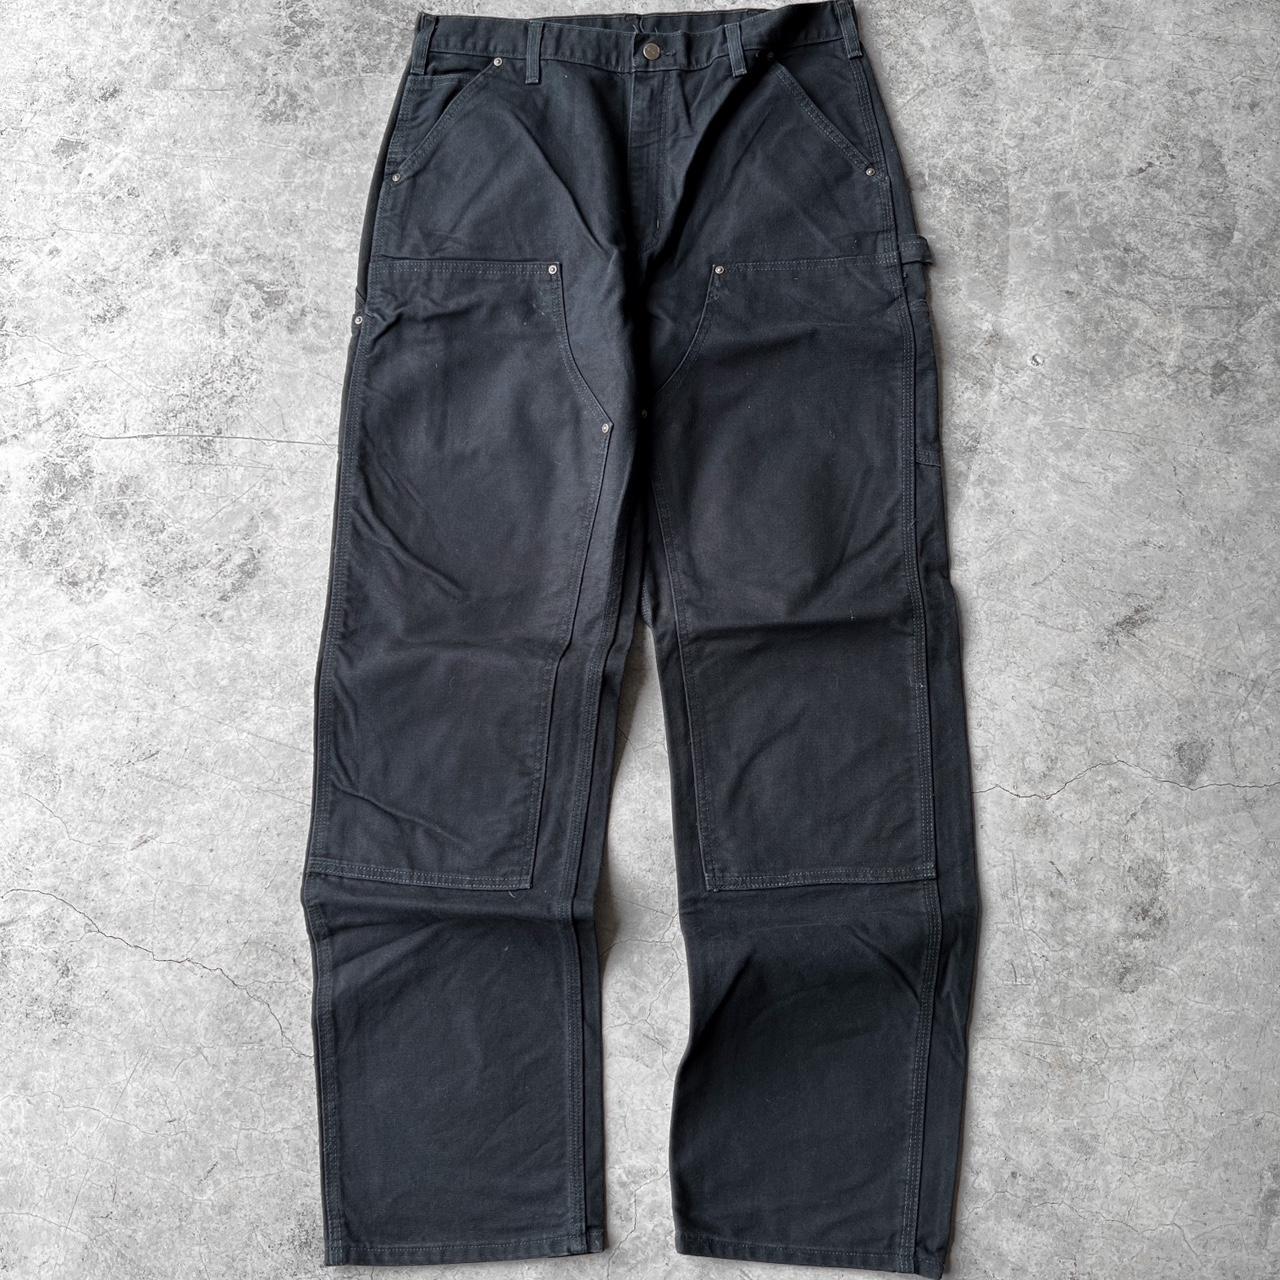 Carhartt Men's Black and Navy Trousers | Depop